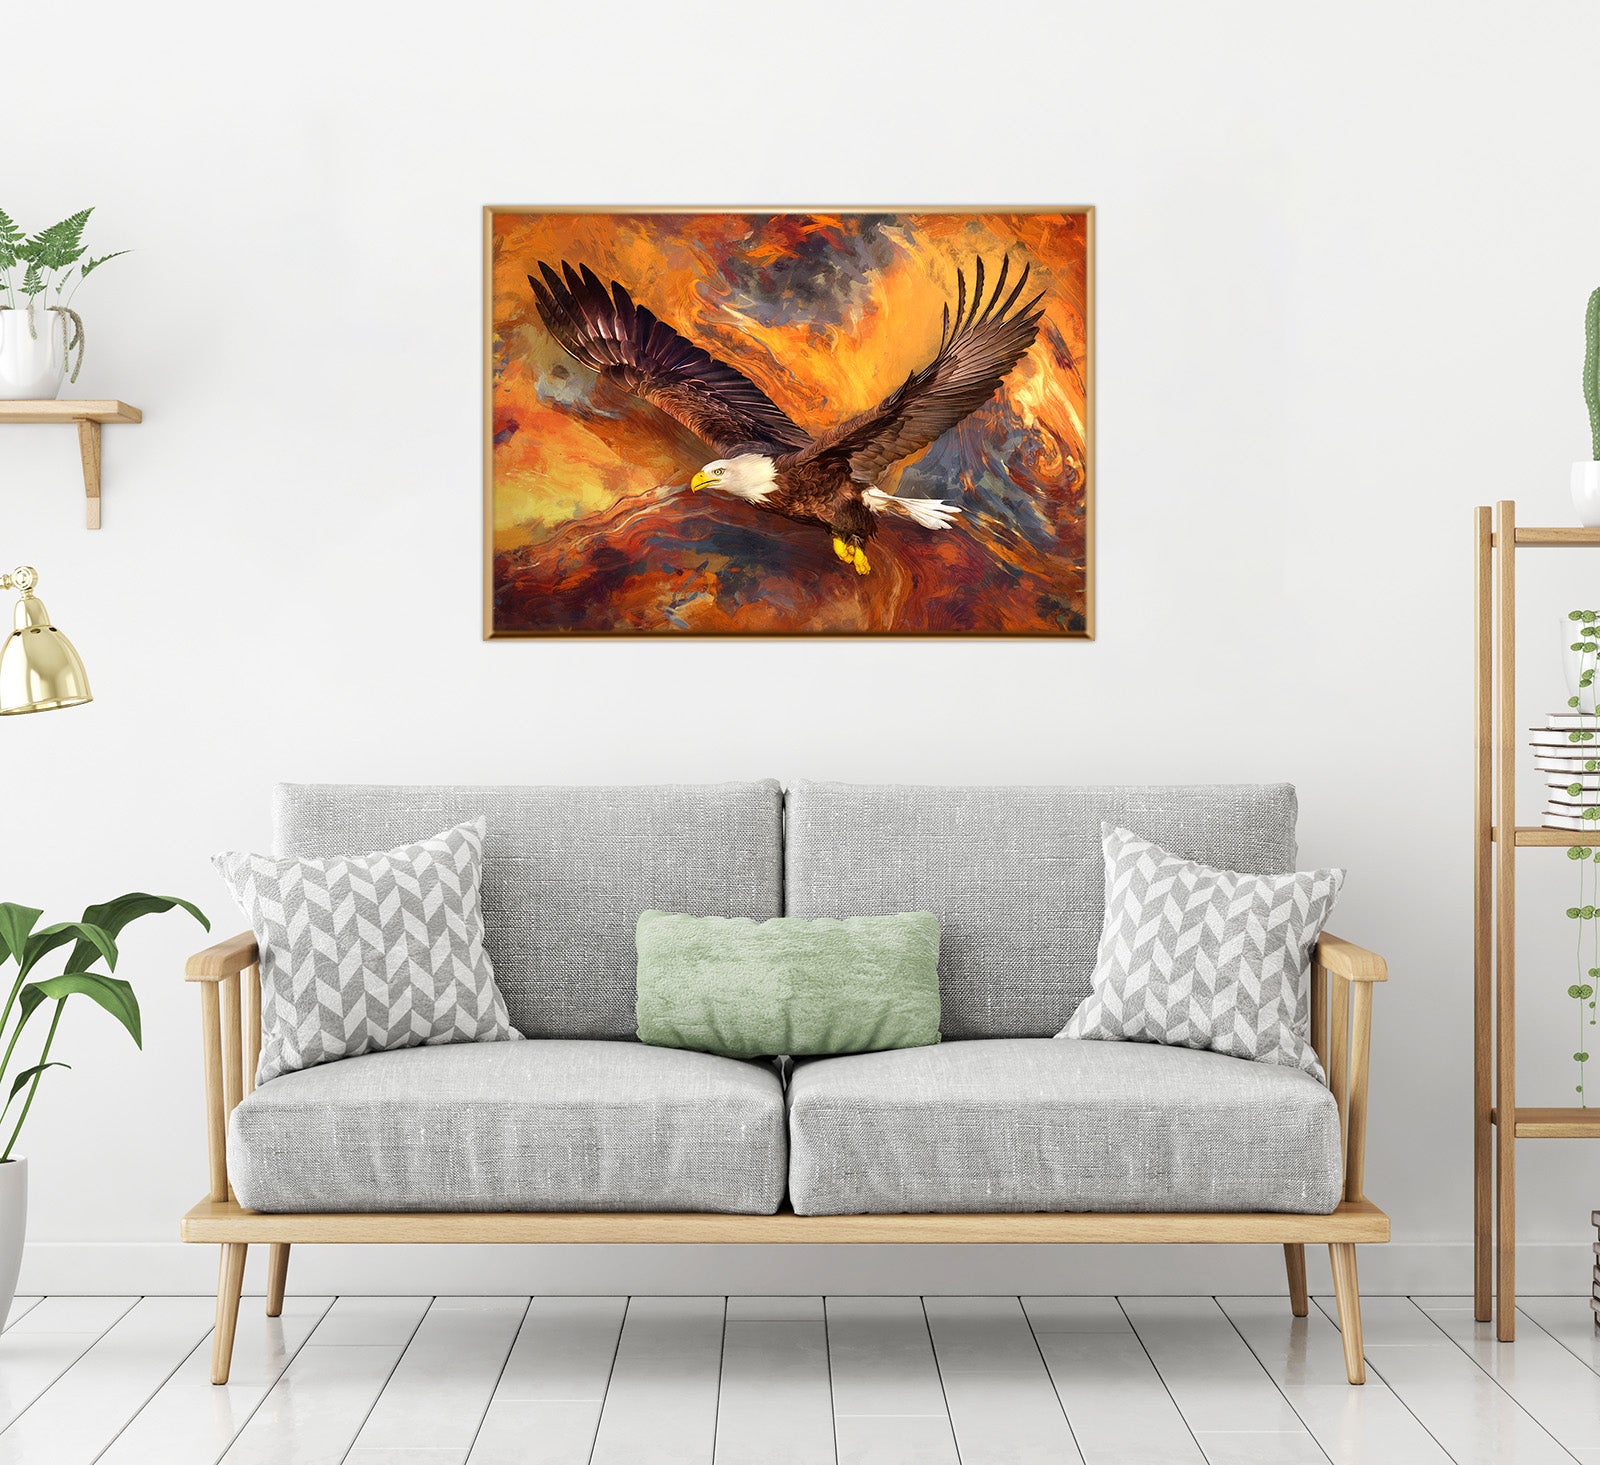 Digital Art Wall Painting (Eagle)